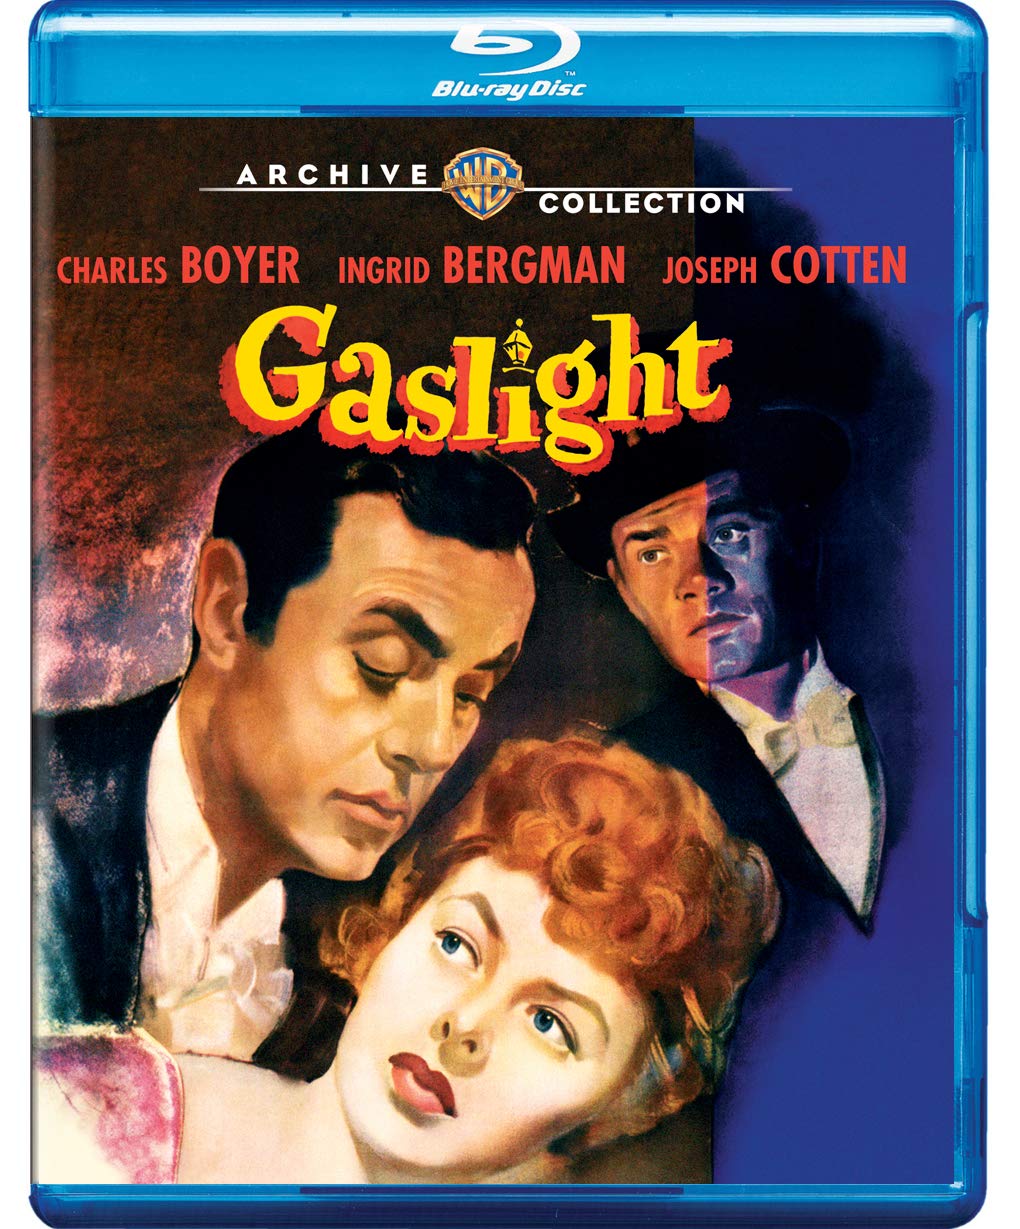 Gaslight (1945) starring Charles Boyer, Ingrid Bergman, Angela Lansbury